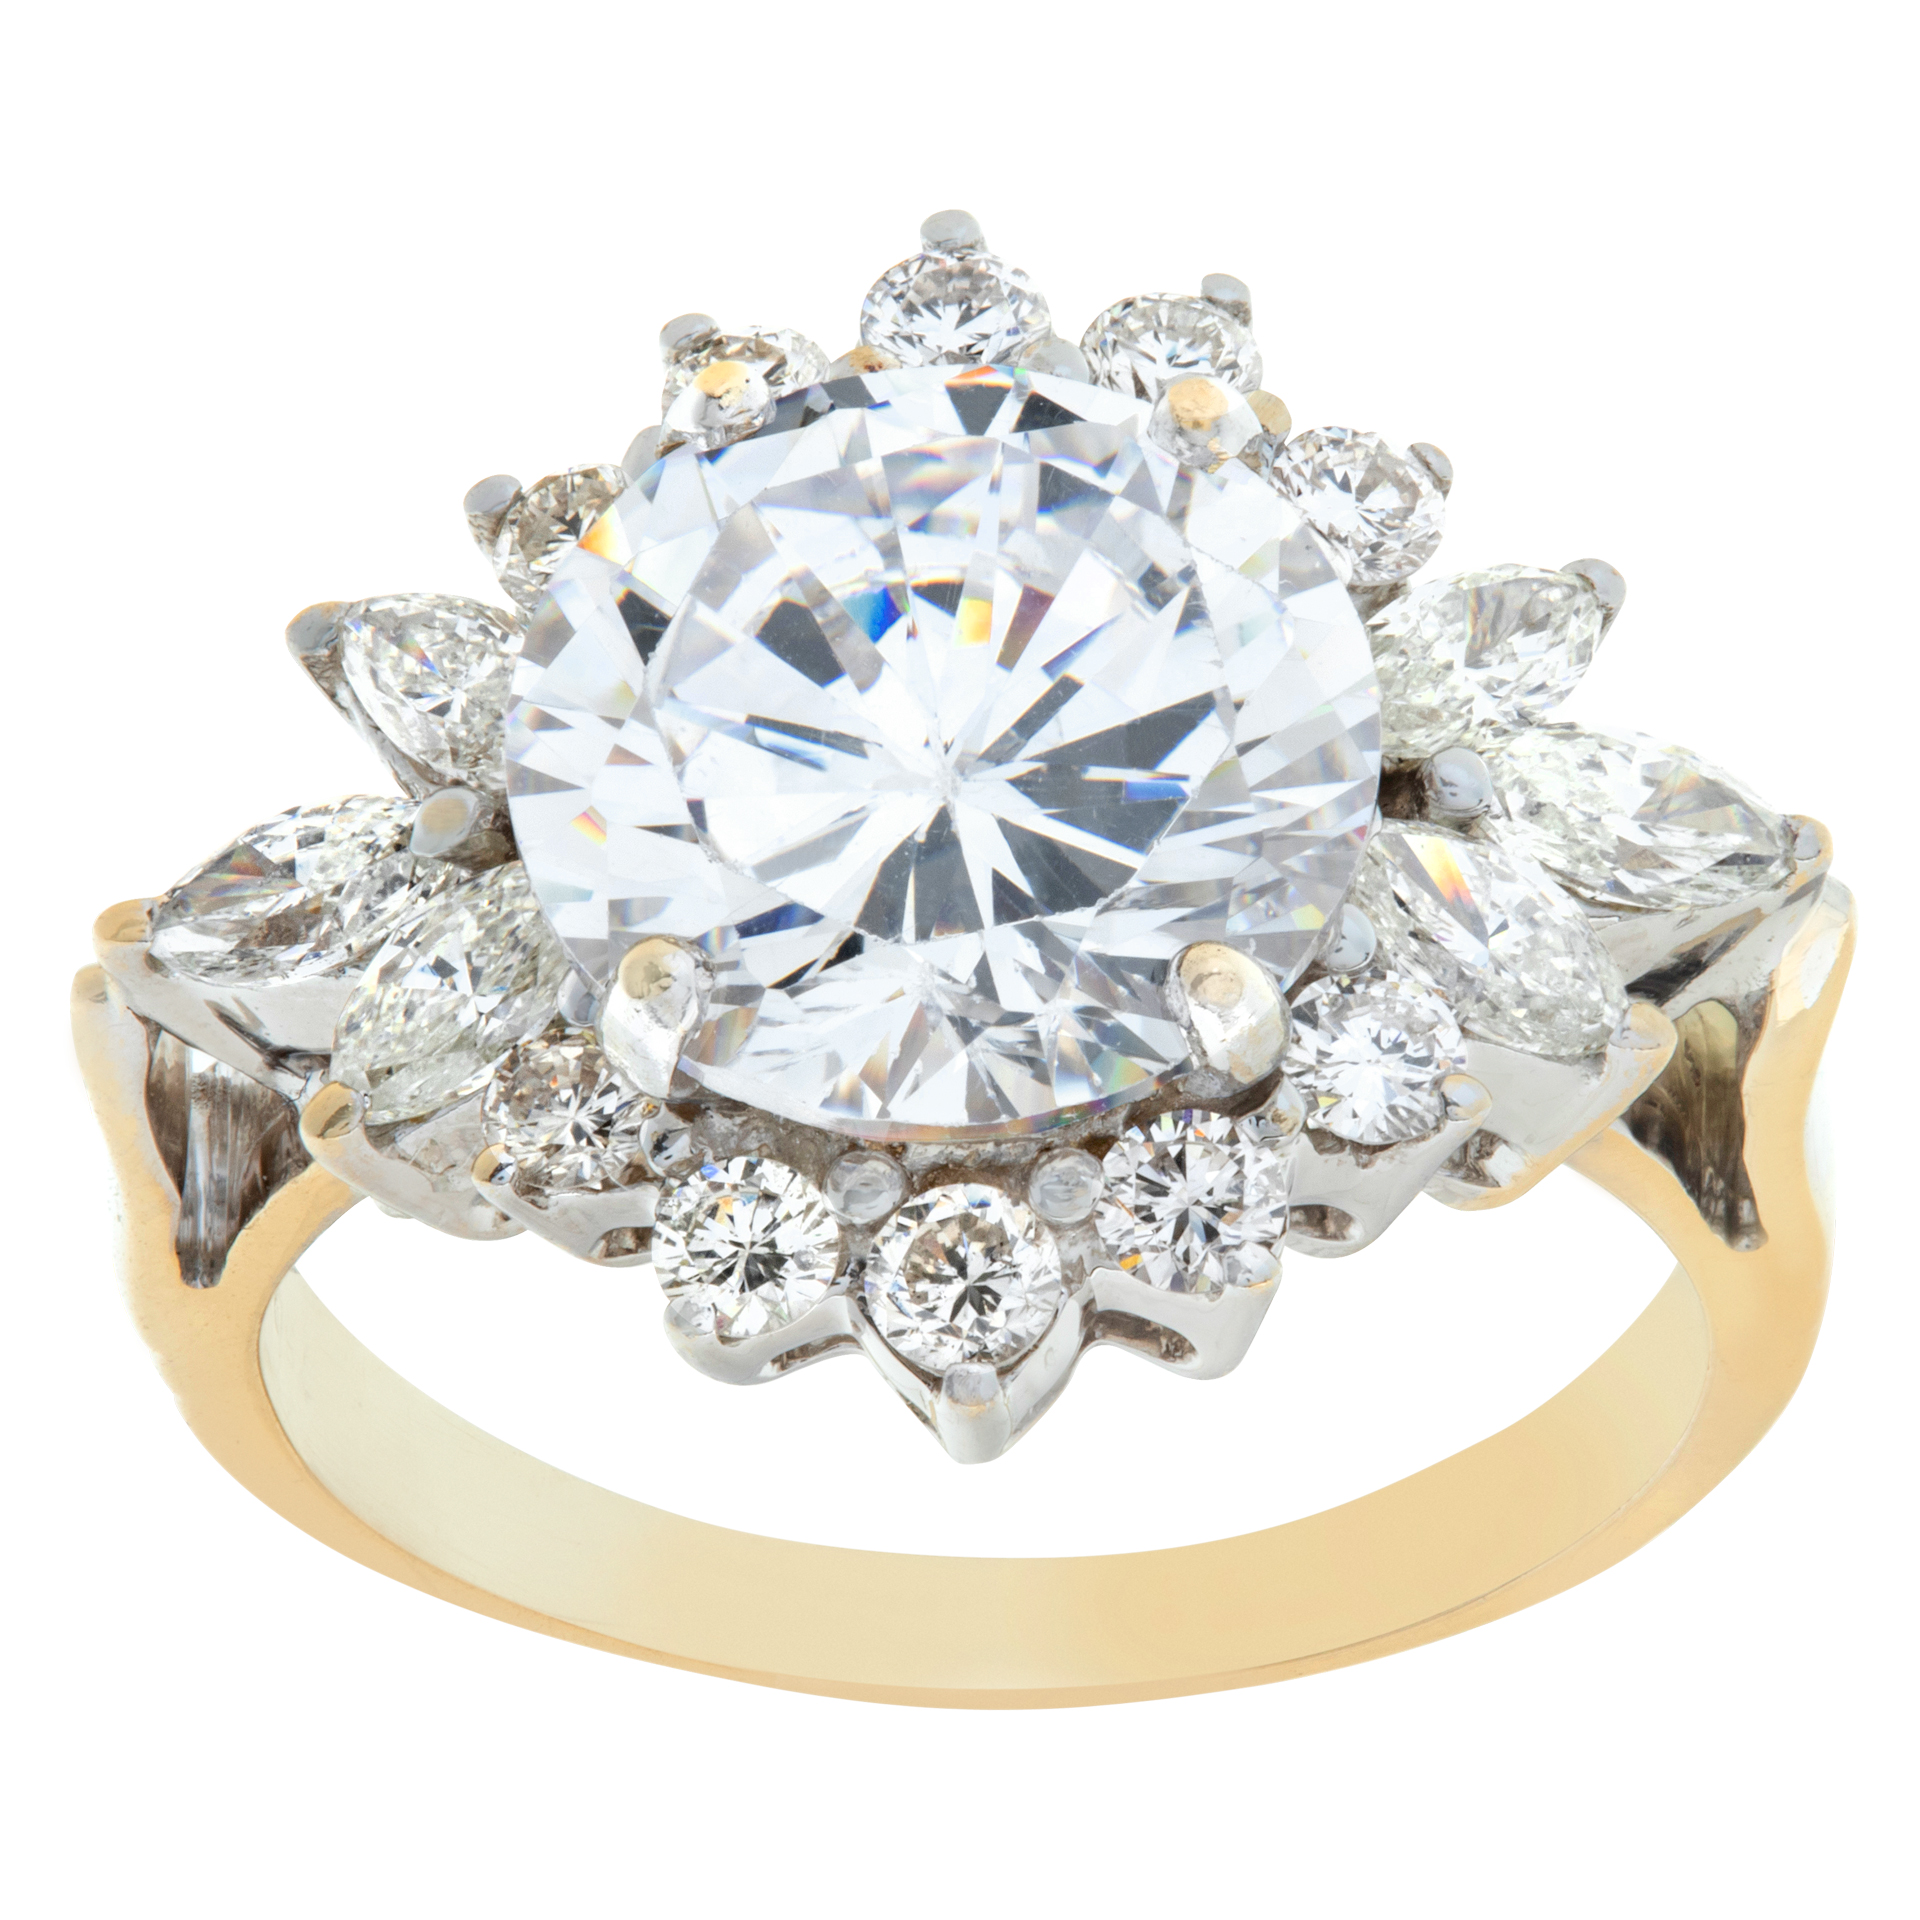 GIA certified 3.04 carat round brilliant cut diamond- D color- SI2 clarity.